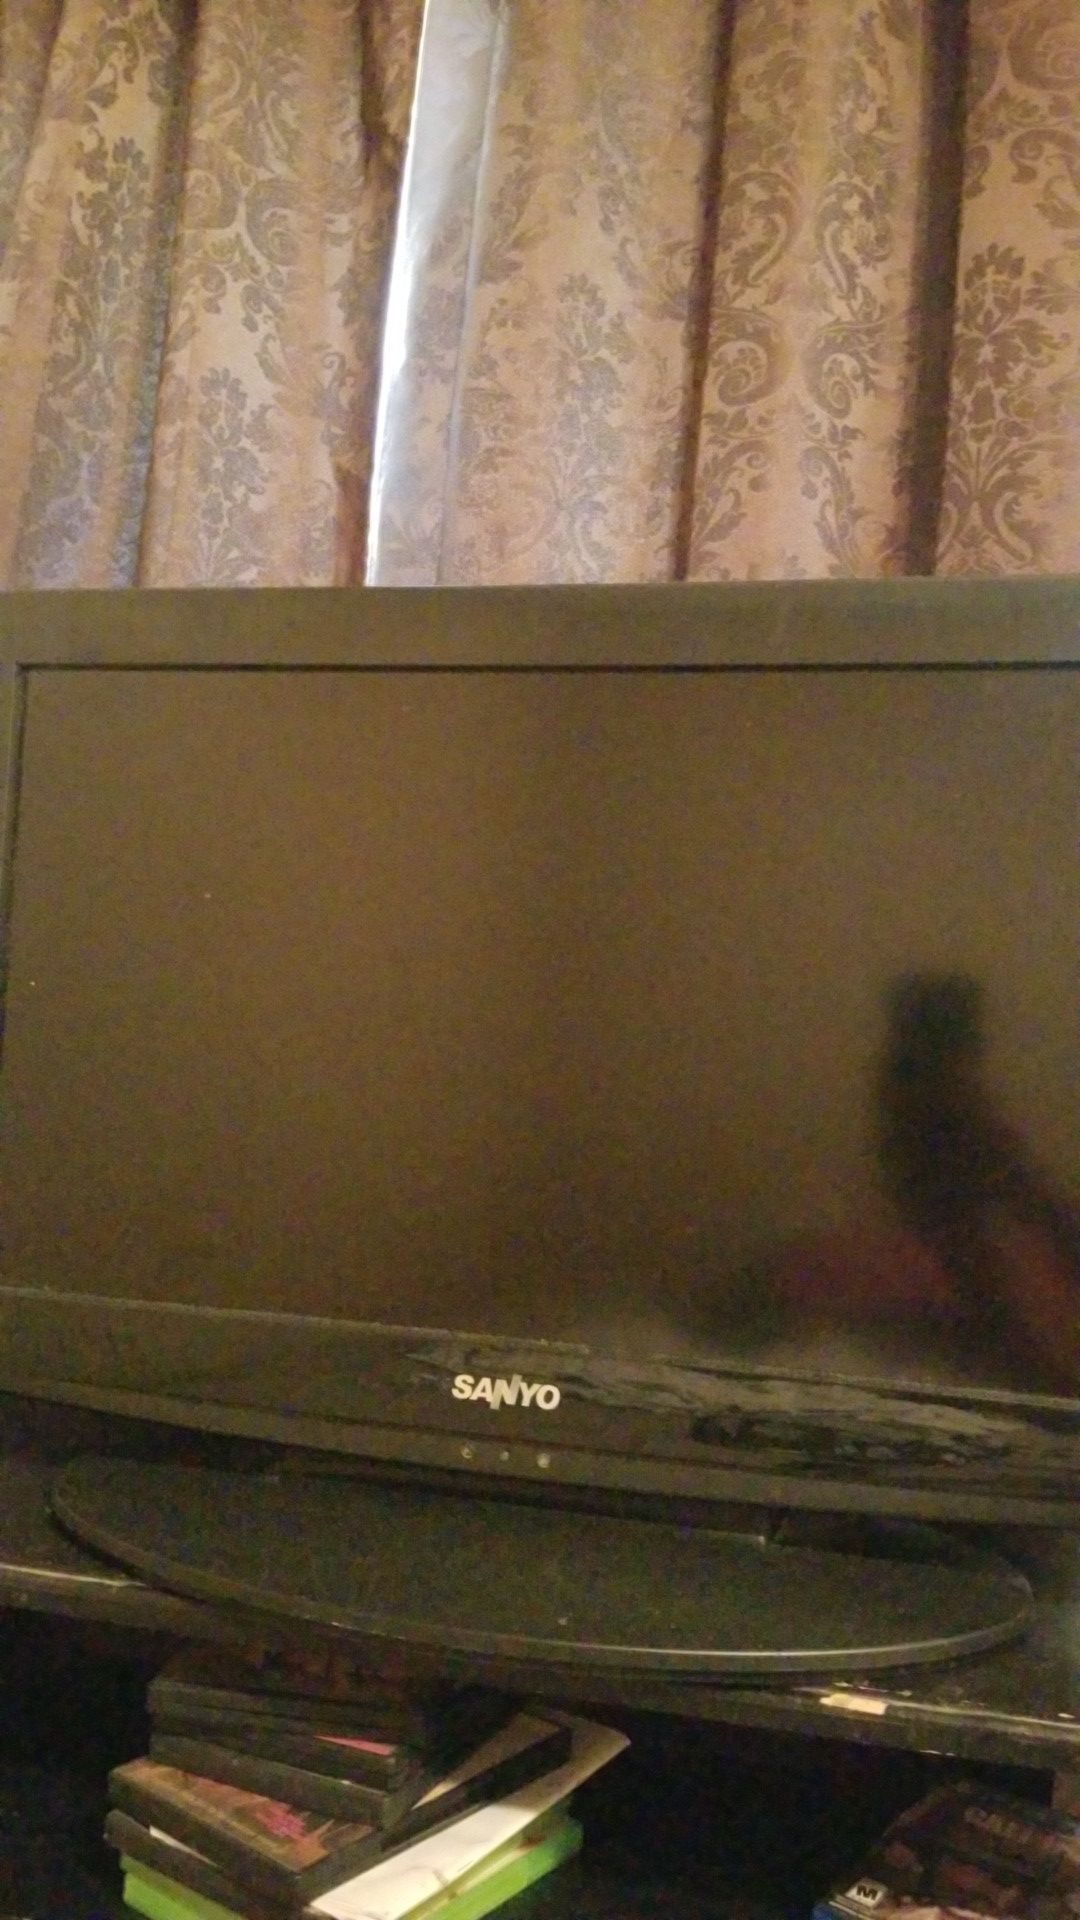 Sanyo Tv